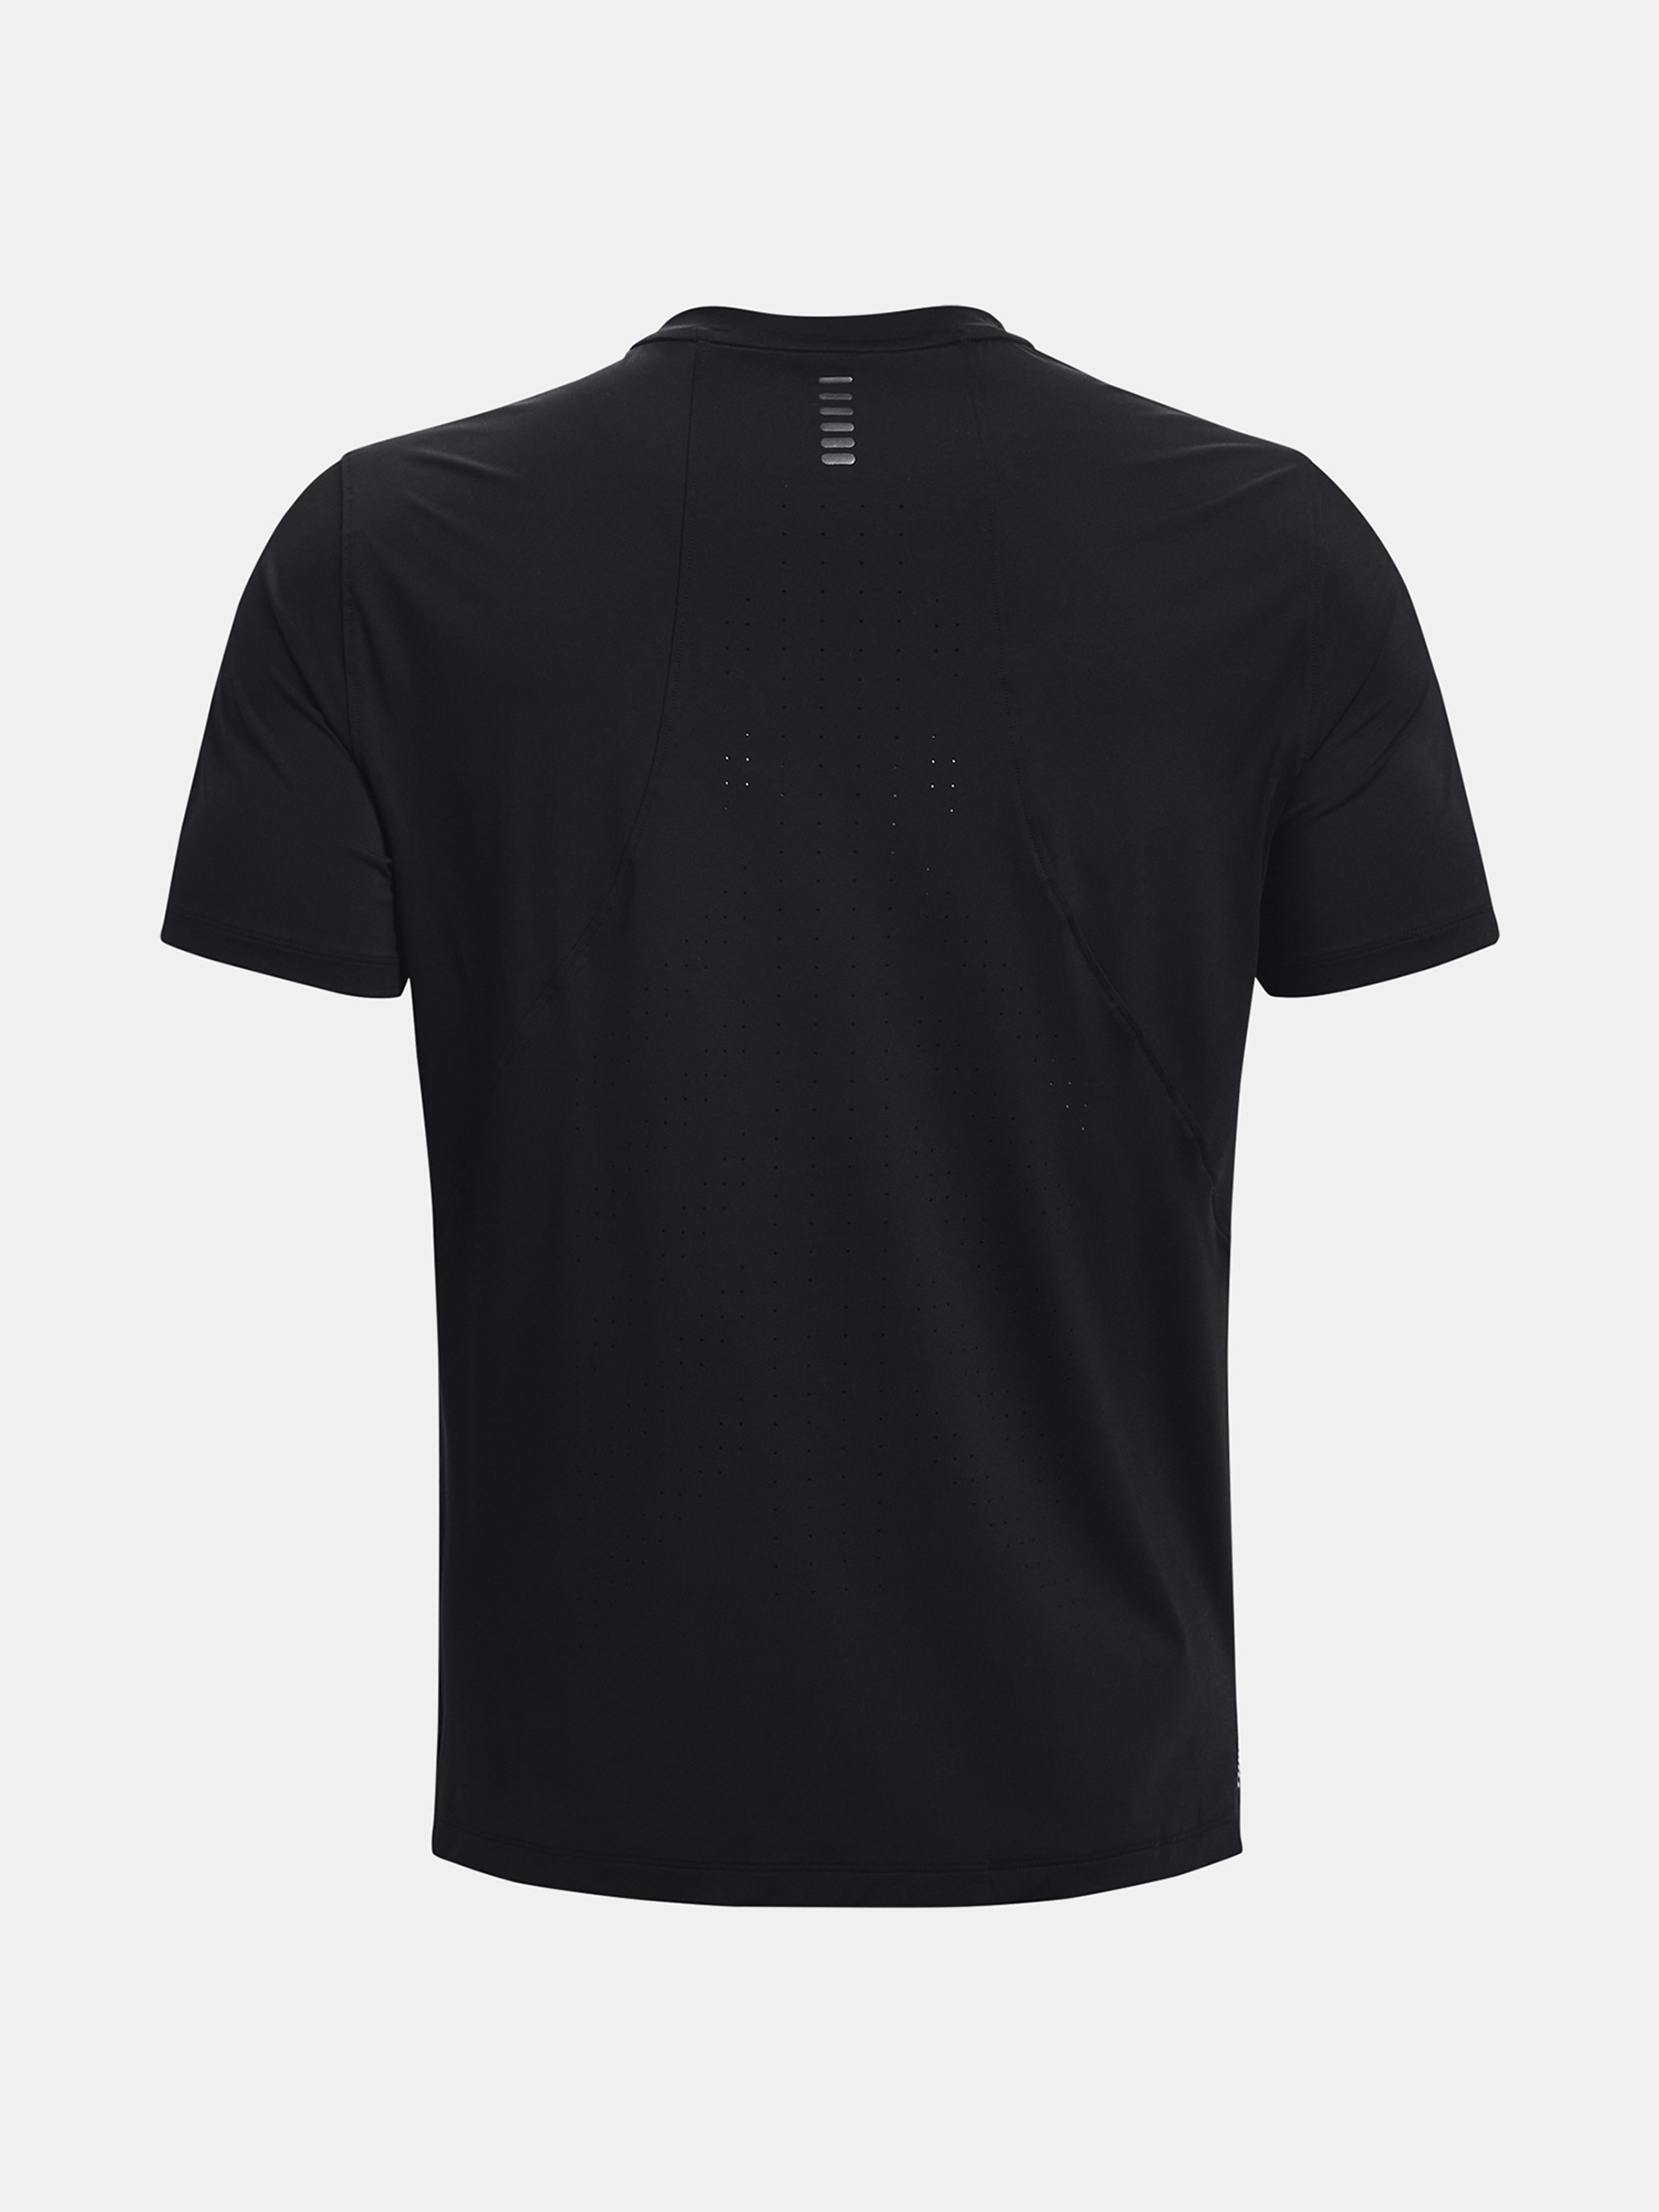  UA Iso-Chill Laser Tee-BLK - men's running shirt - UNDER  ARMOUR - 48.34 € - outdoorové oblečení a vybavení shop